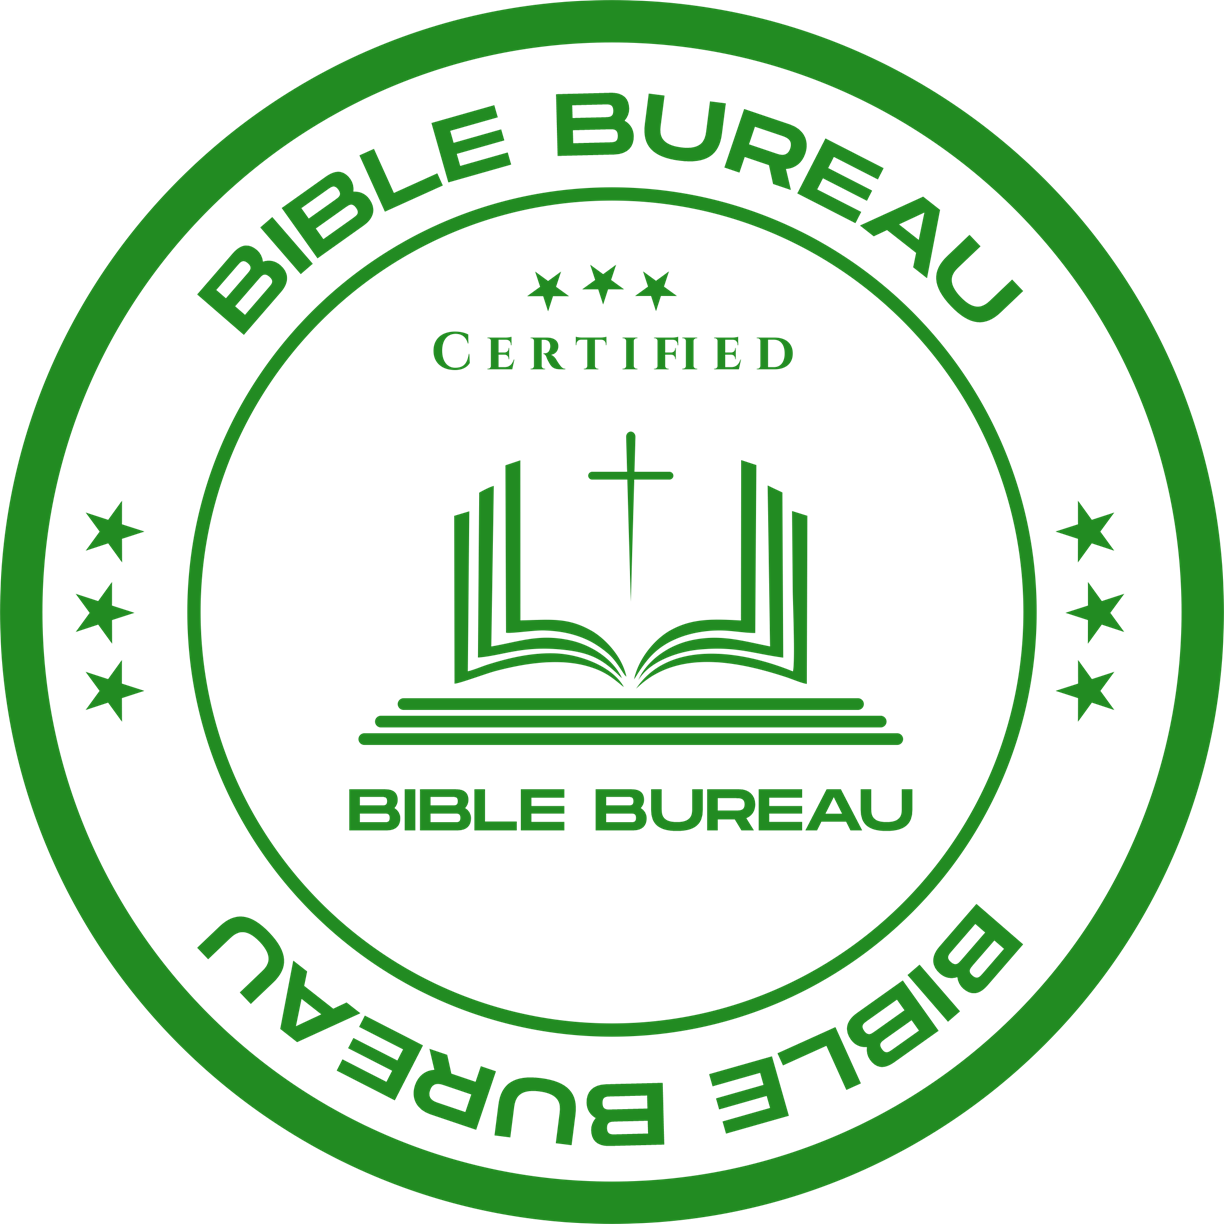 The Bible Bureau Certification